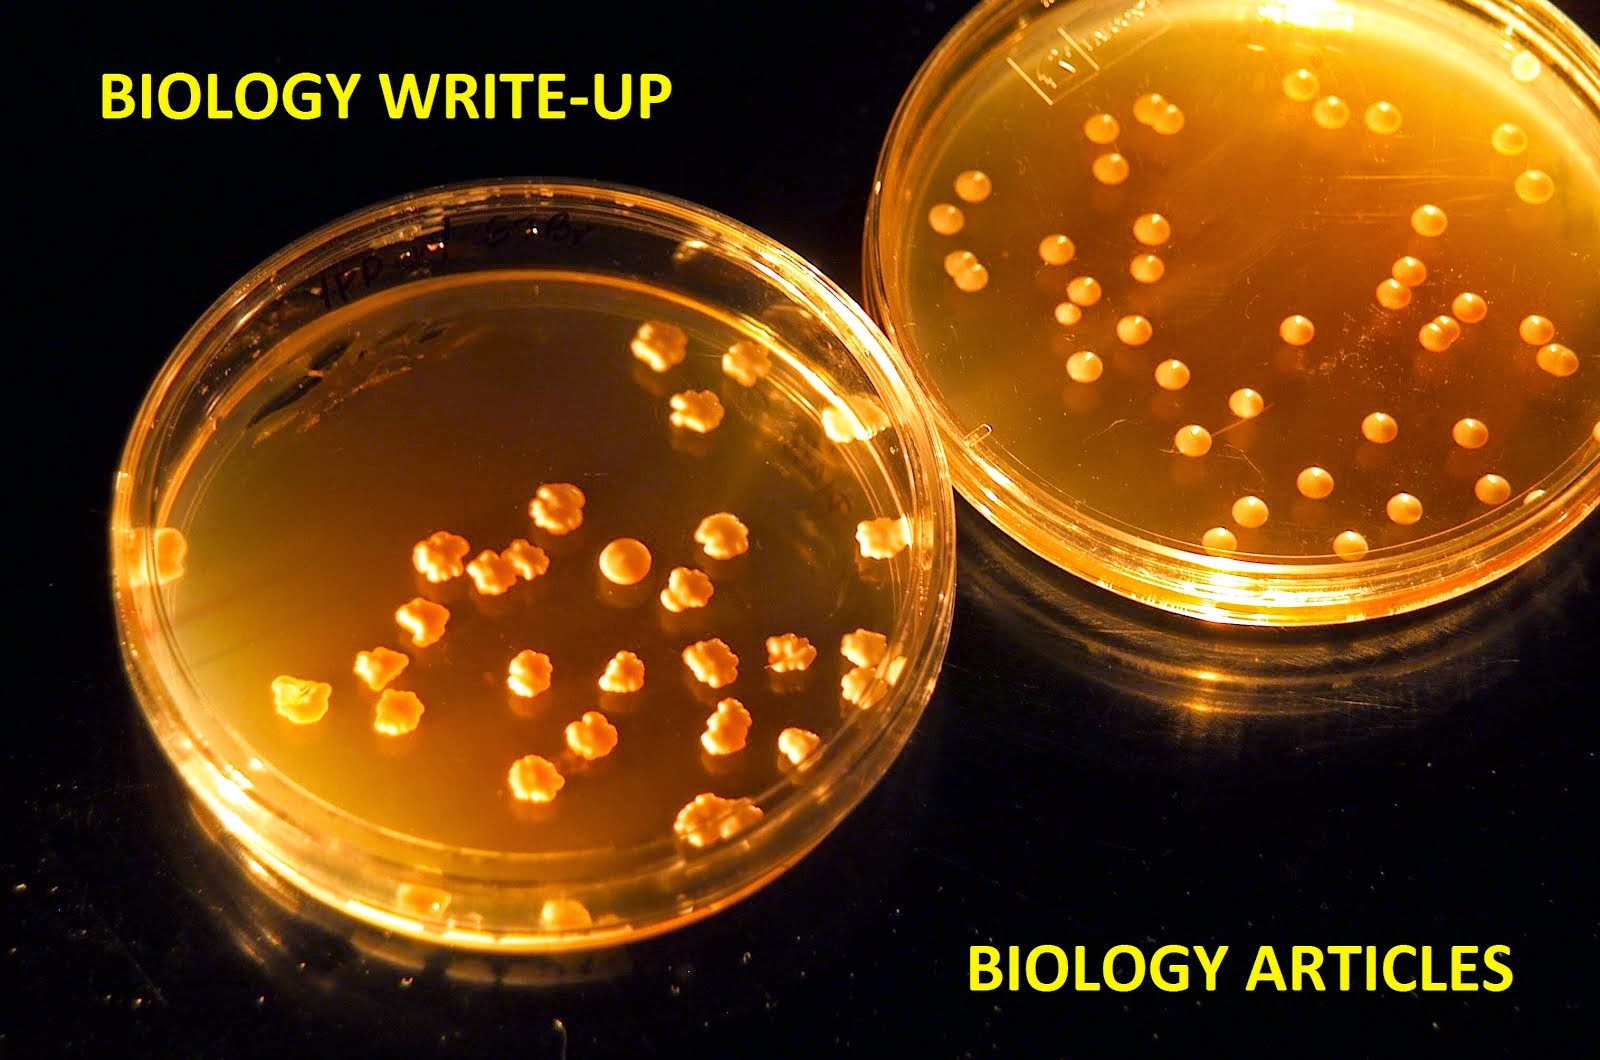 BIOLOGY WRITE-UP - BIOLOGY ARTICLES